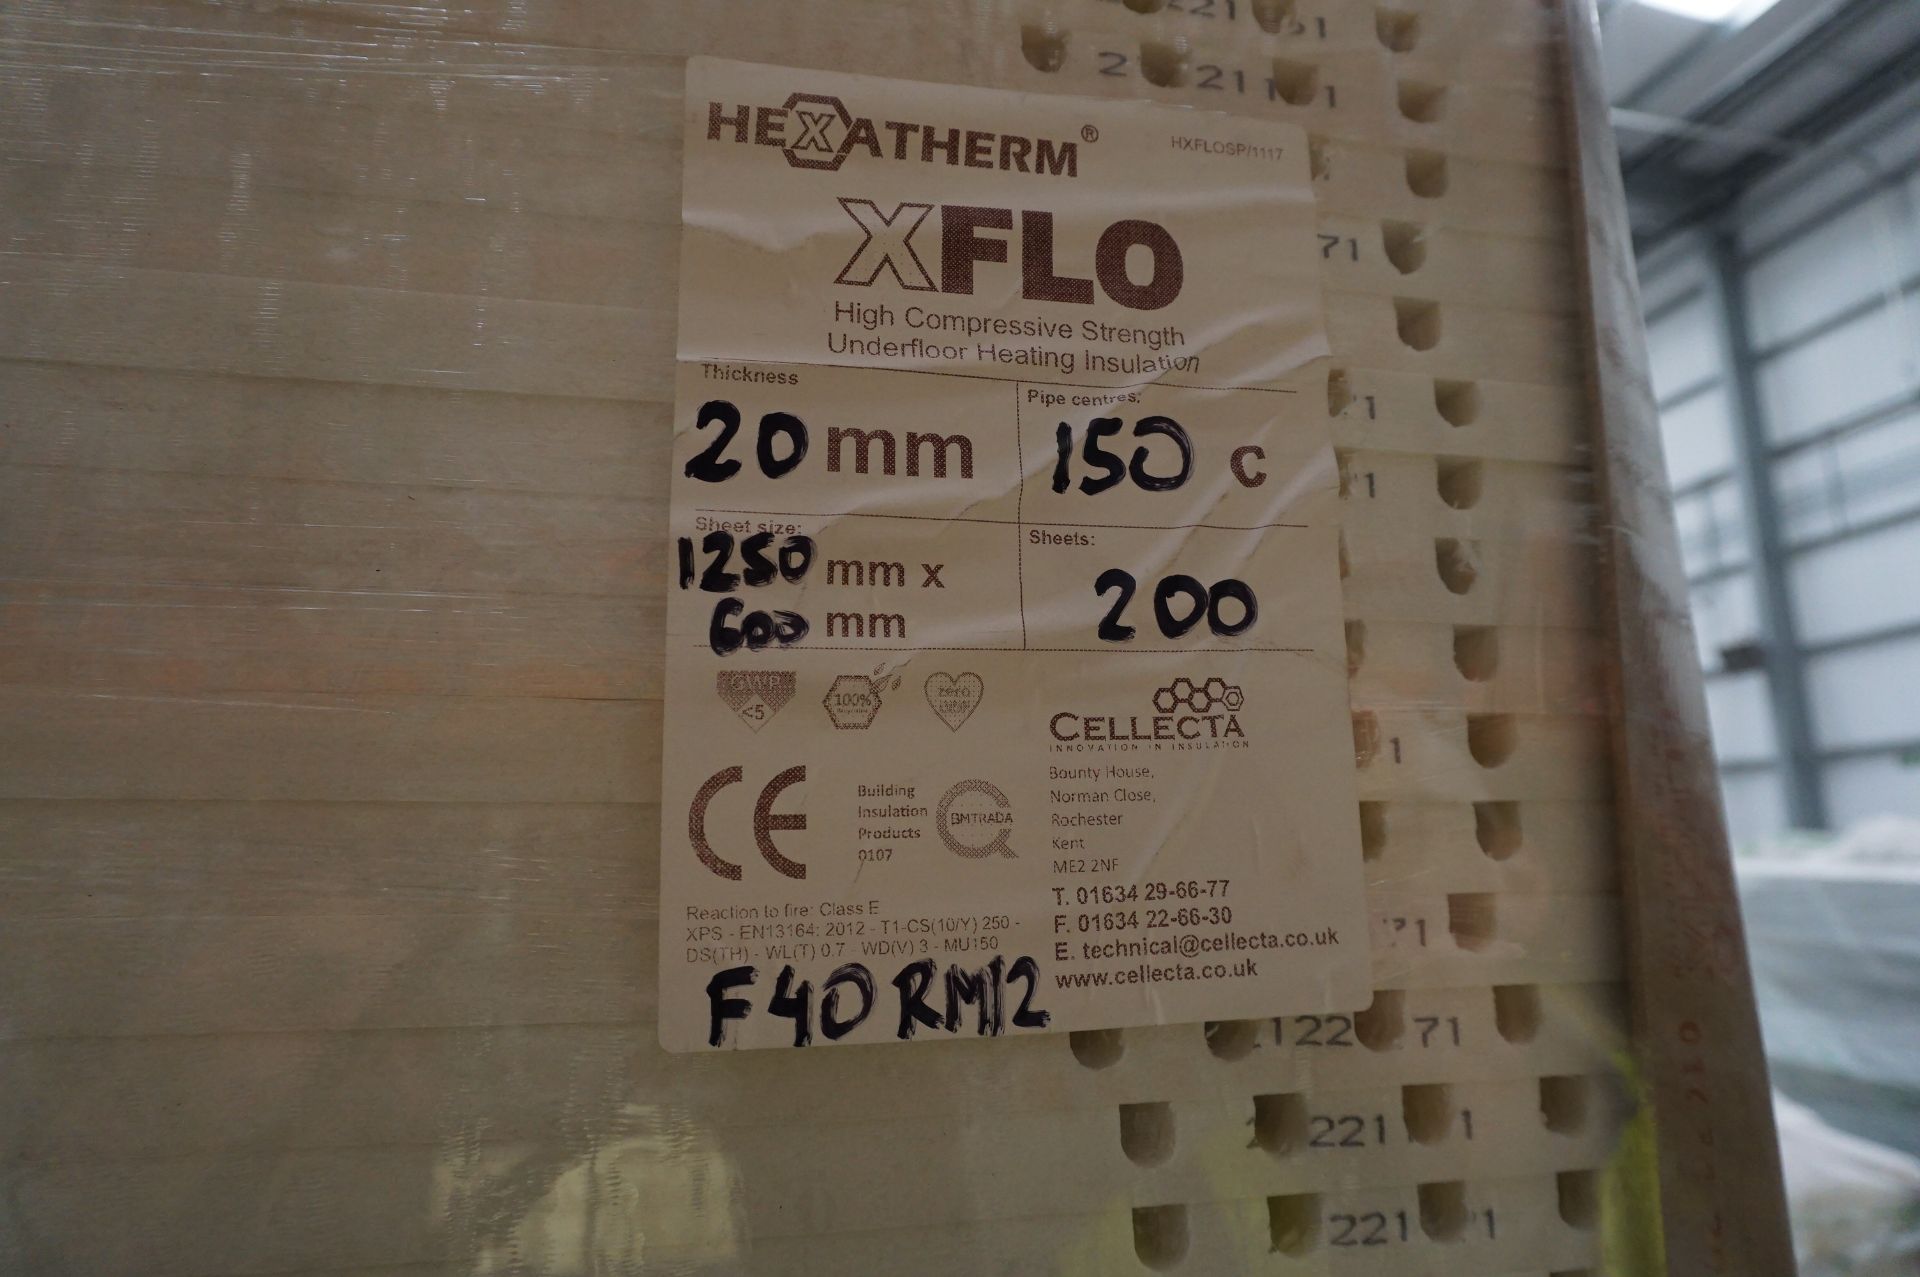 200x (no.) Cellecta, Hexatherm XFLO high compressive strength underfloor heating insulation - Image 2 of 6